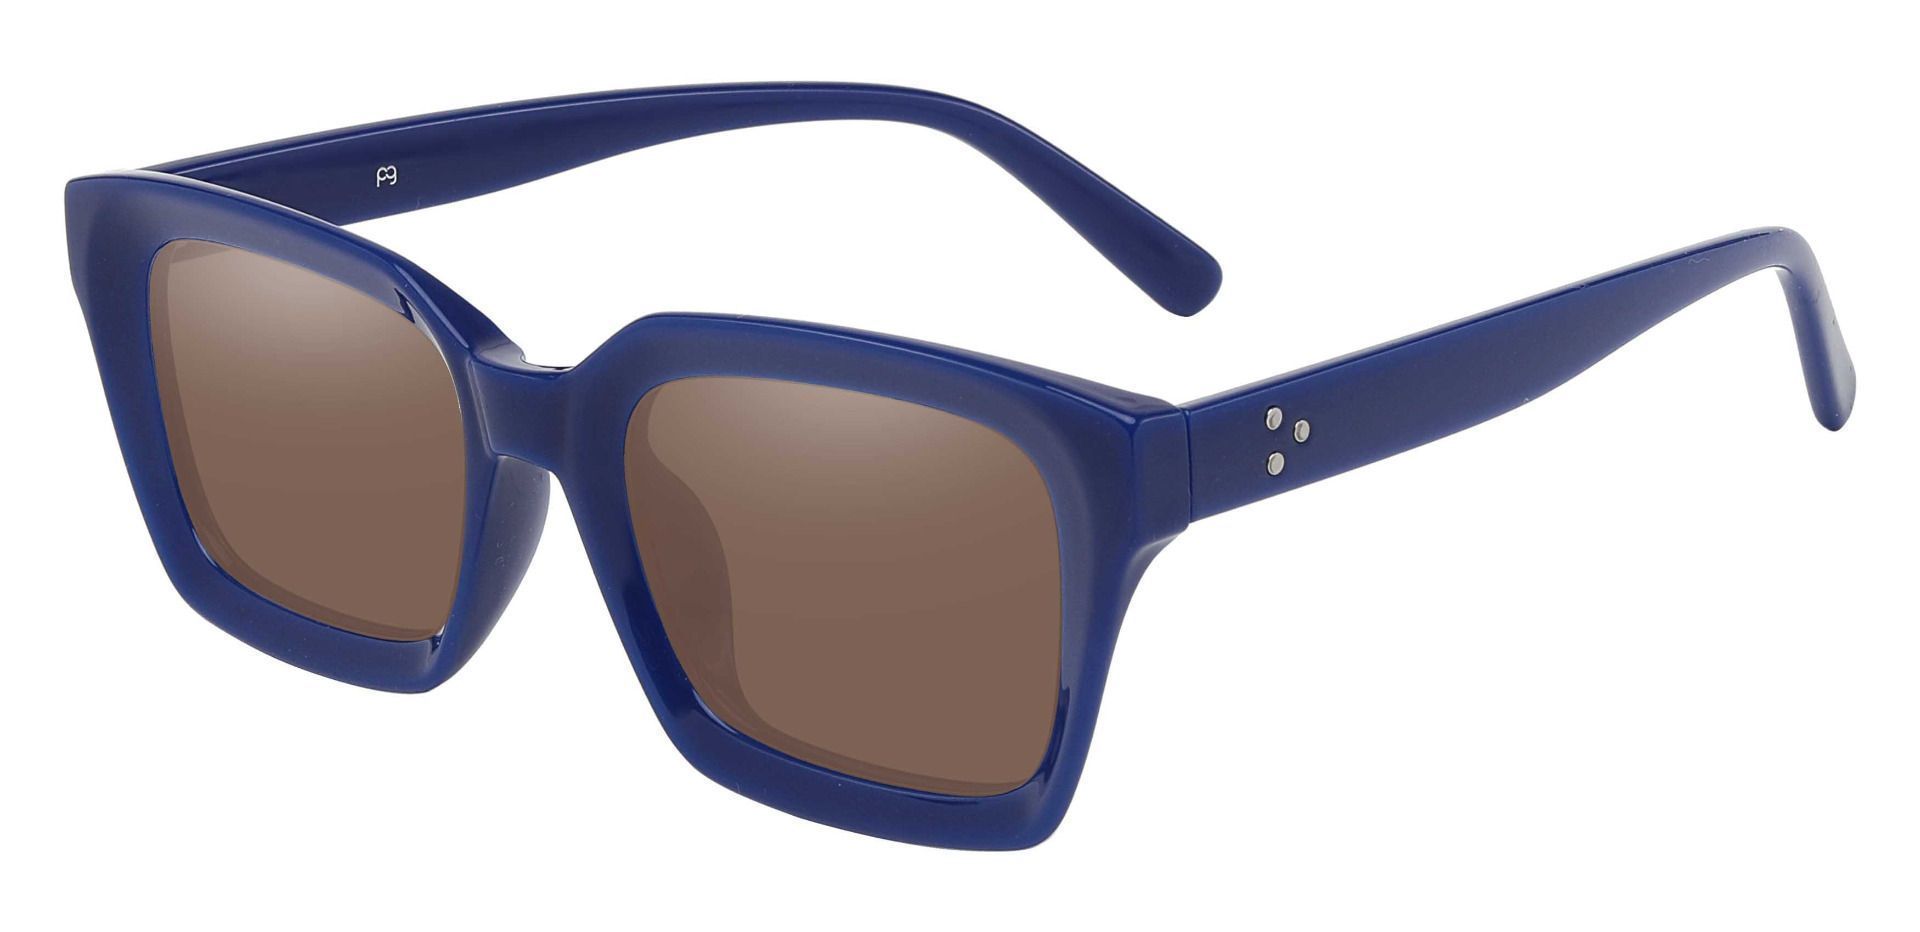 Unity Rectangle Prescription Sunglasses - Blue Frame With Brown Lenses